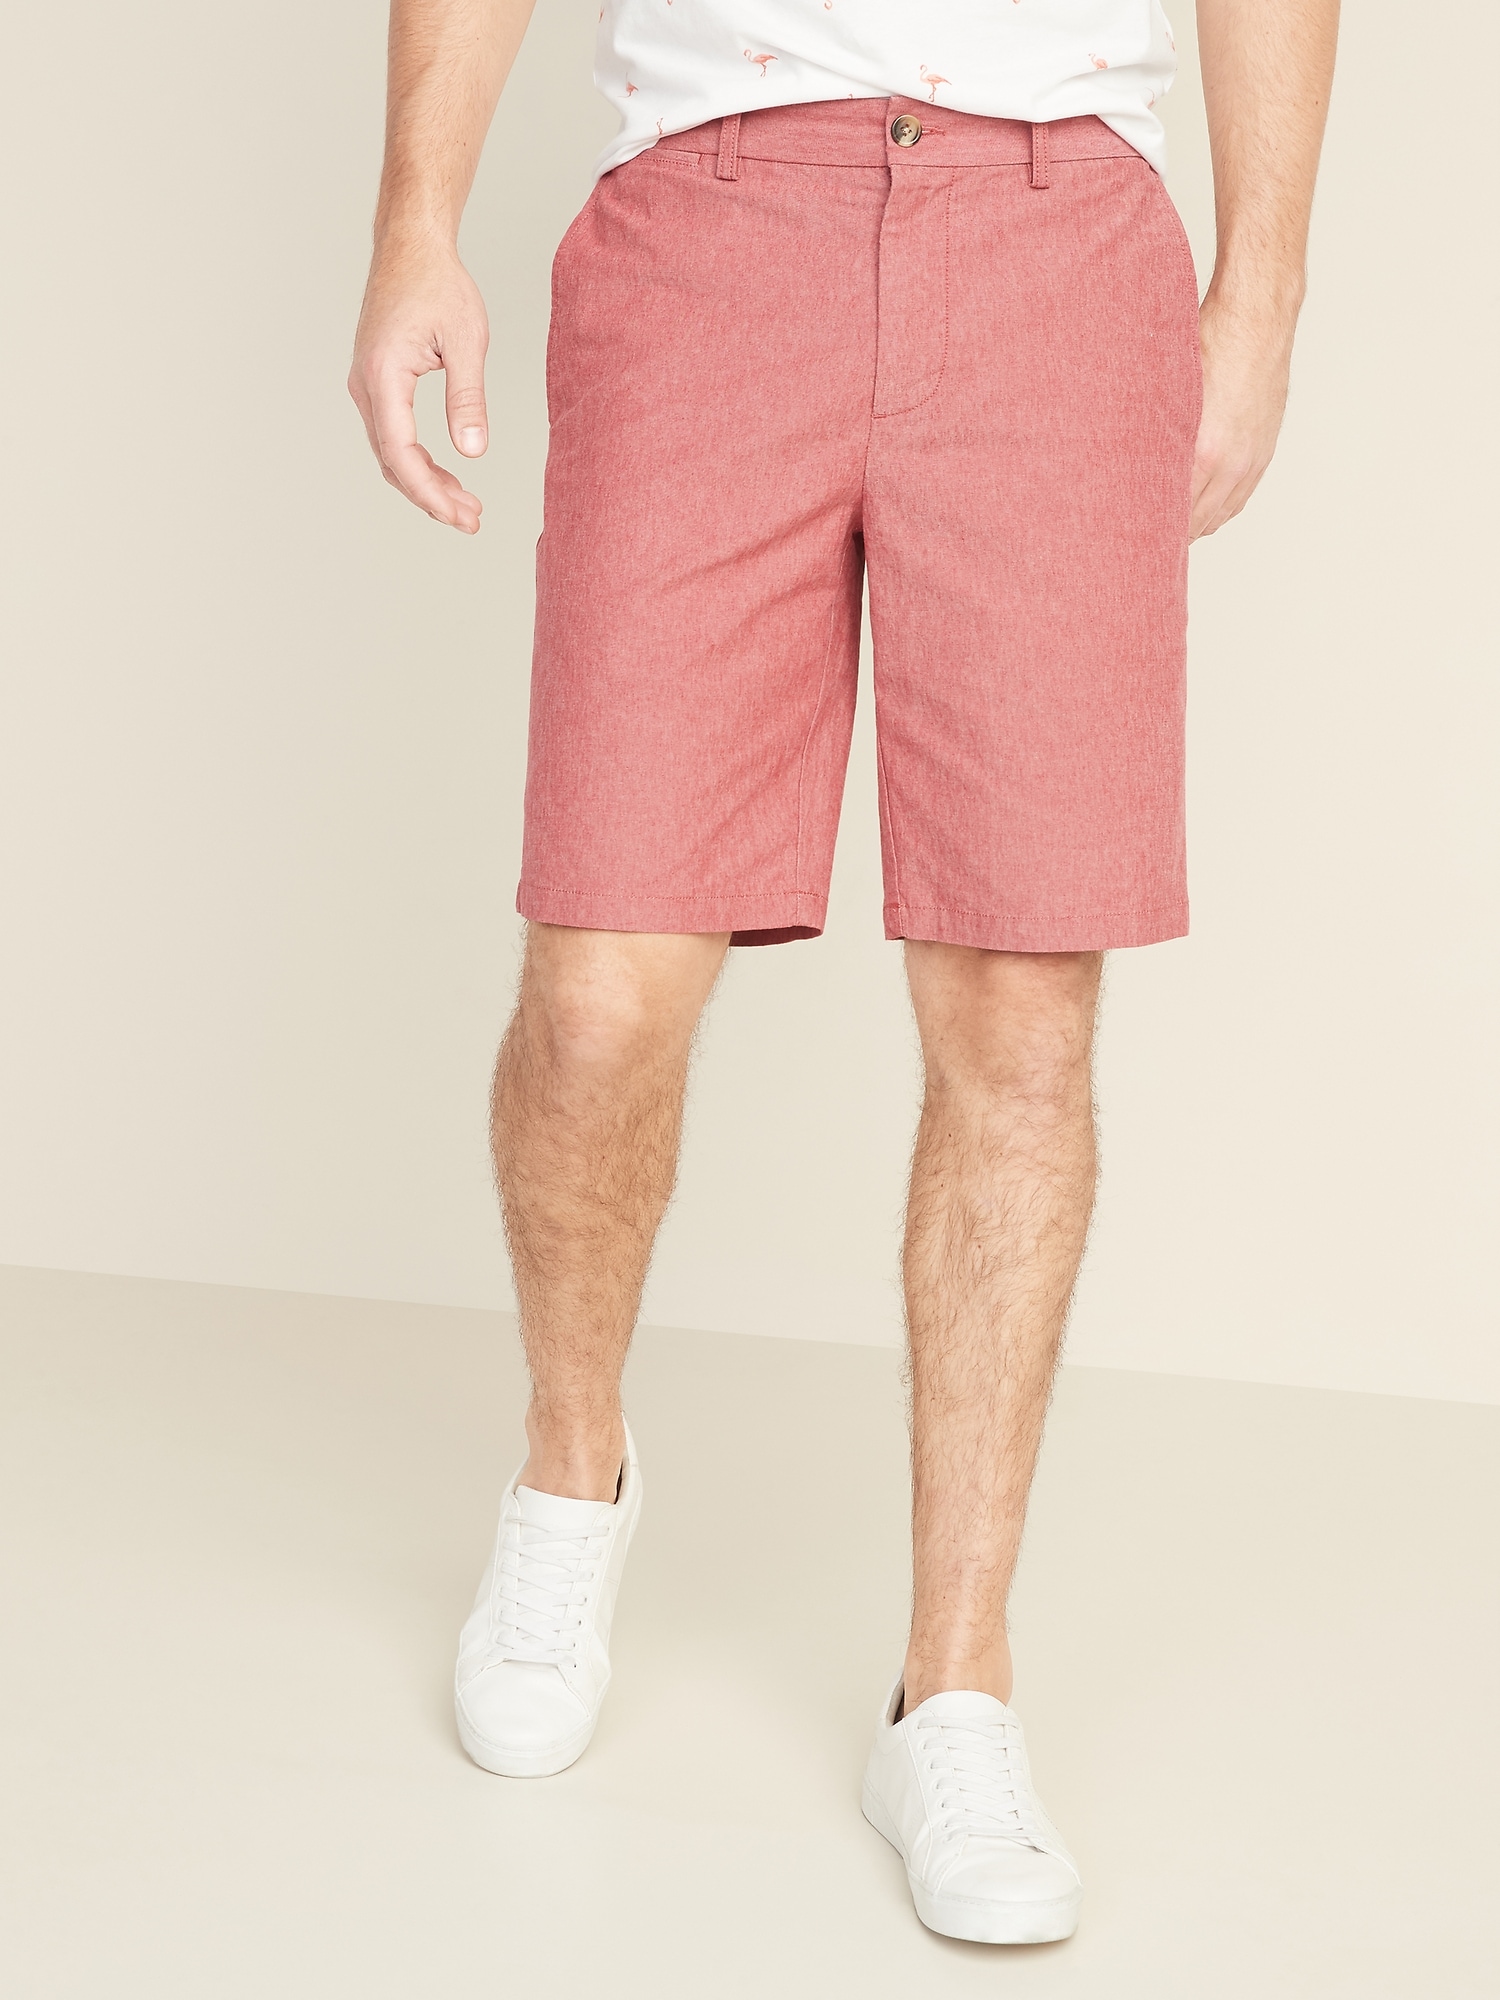 Slim Ultimate Shorts for Men -- 10-inch inseam